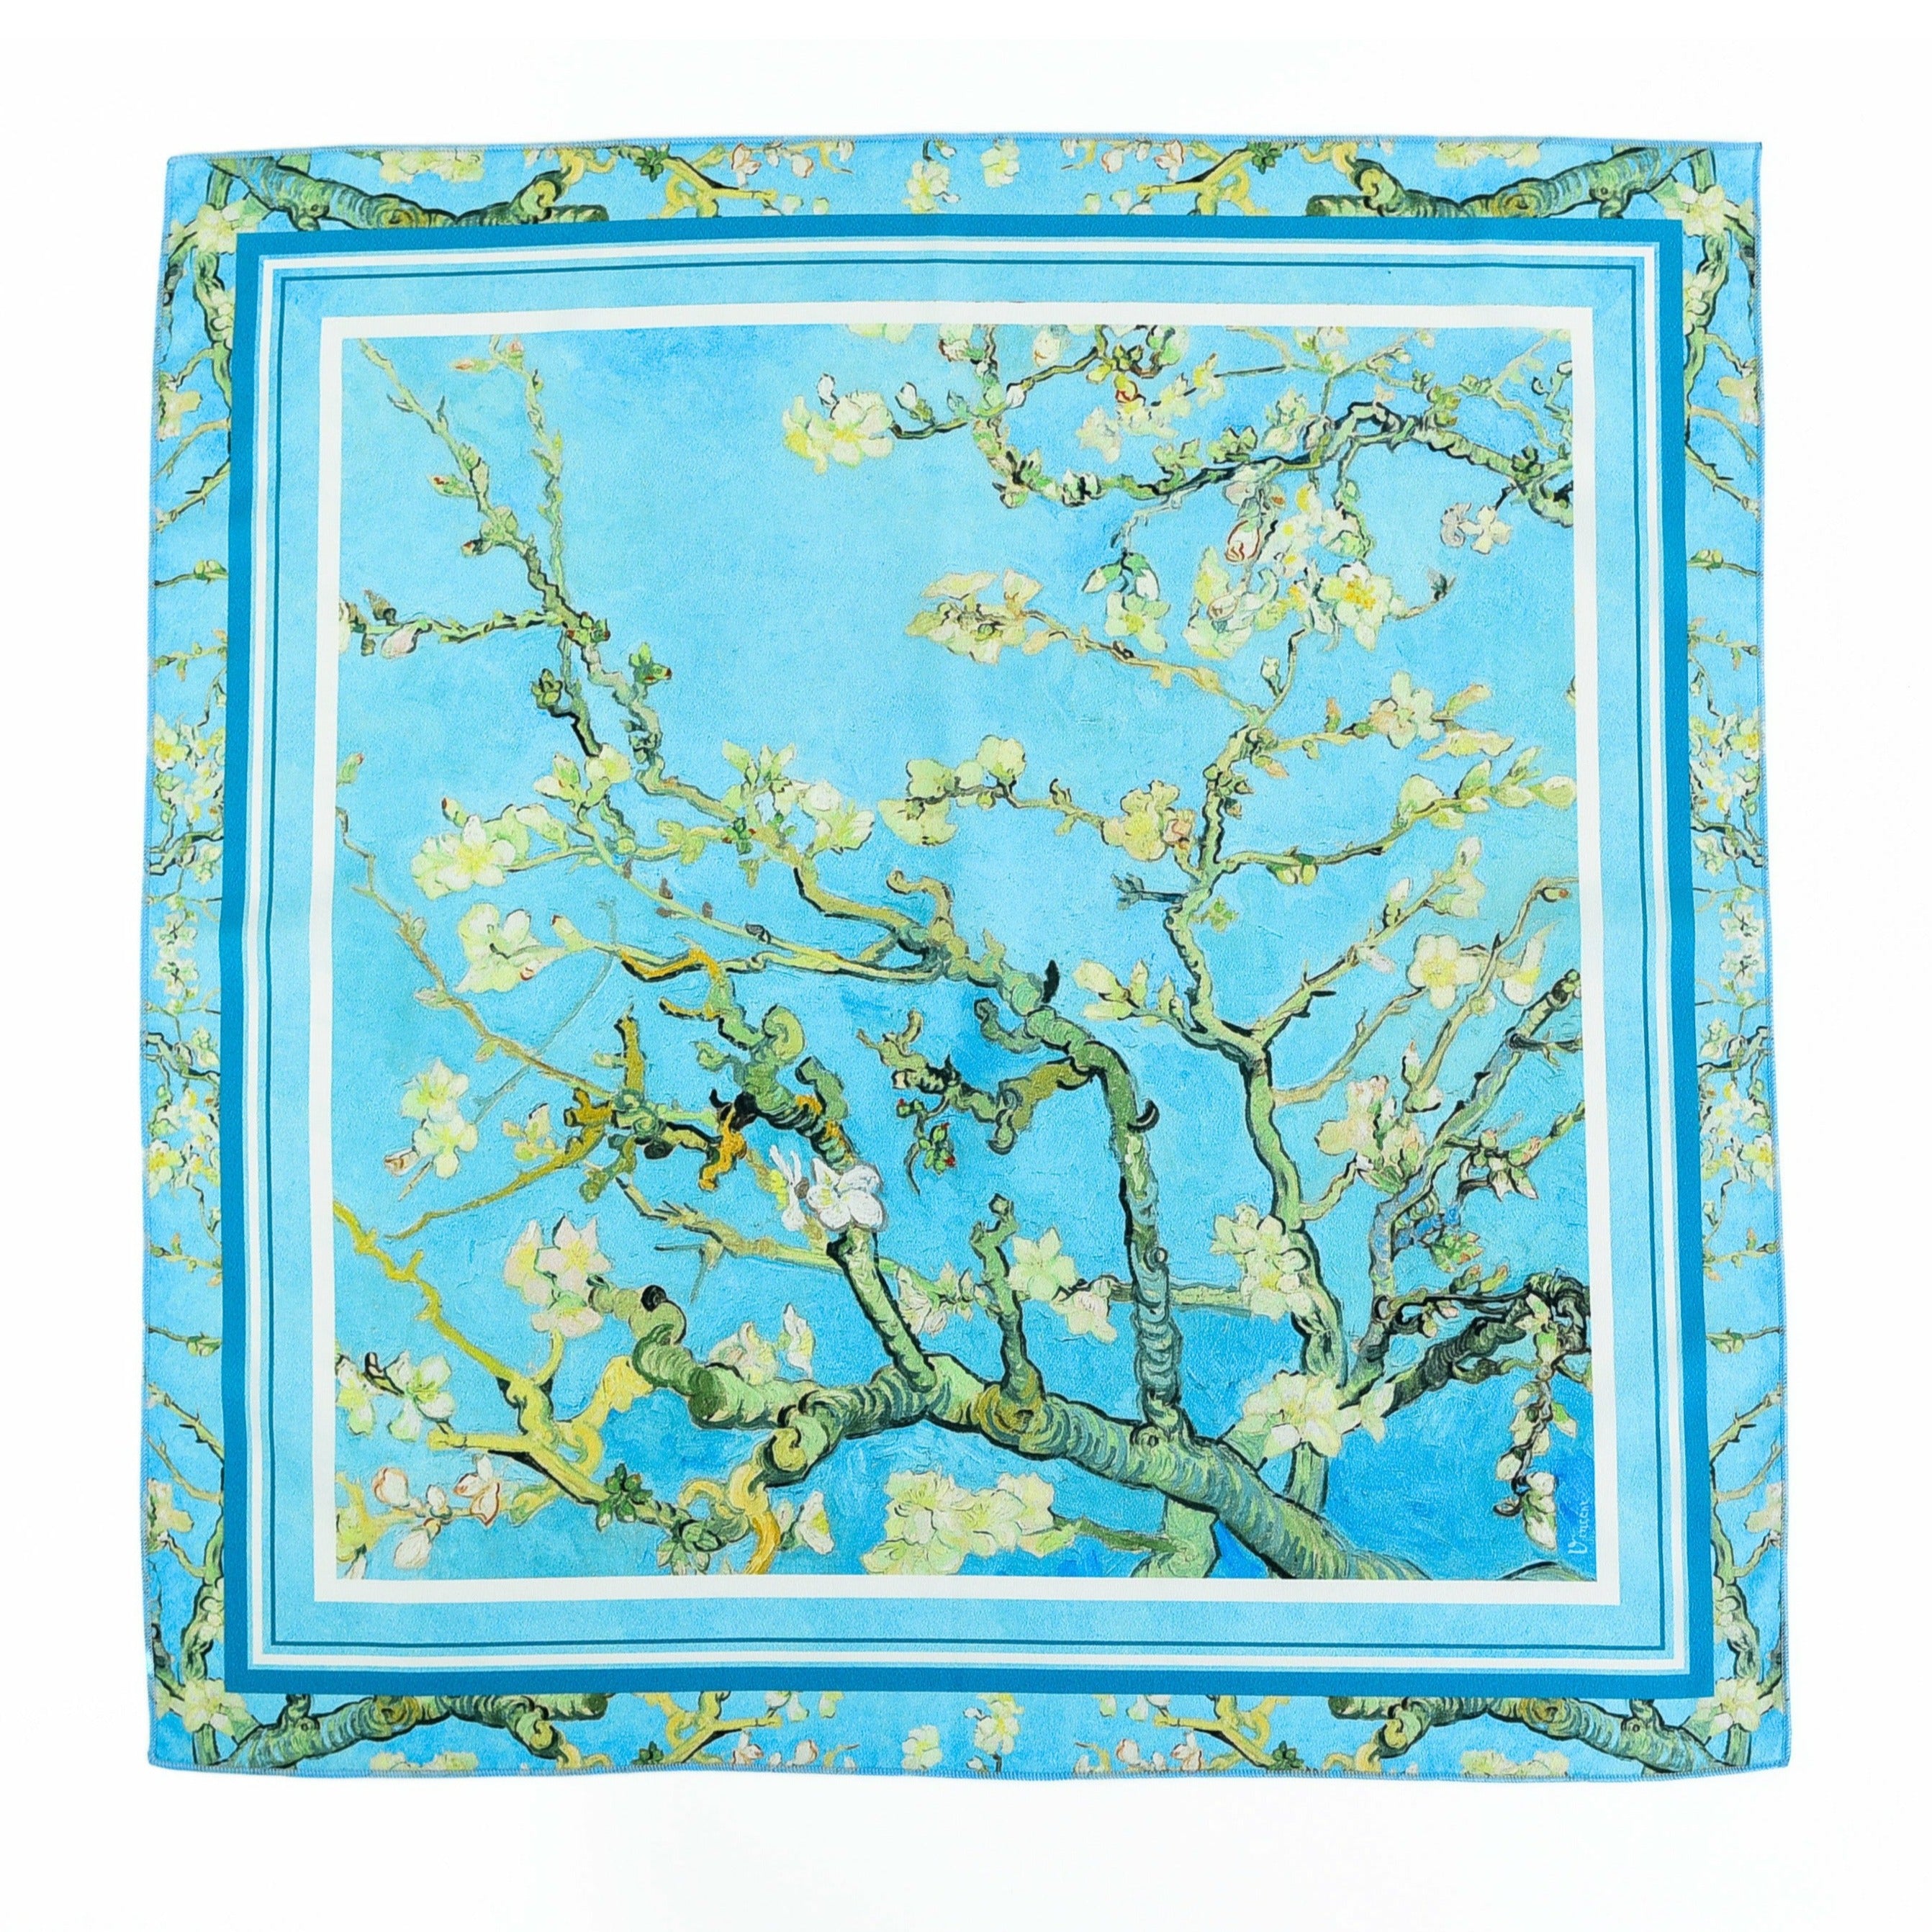 Skarelė Vincent van Gogh "Almond Blossom"